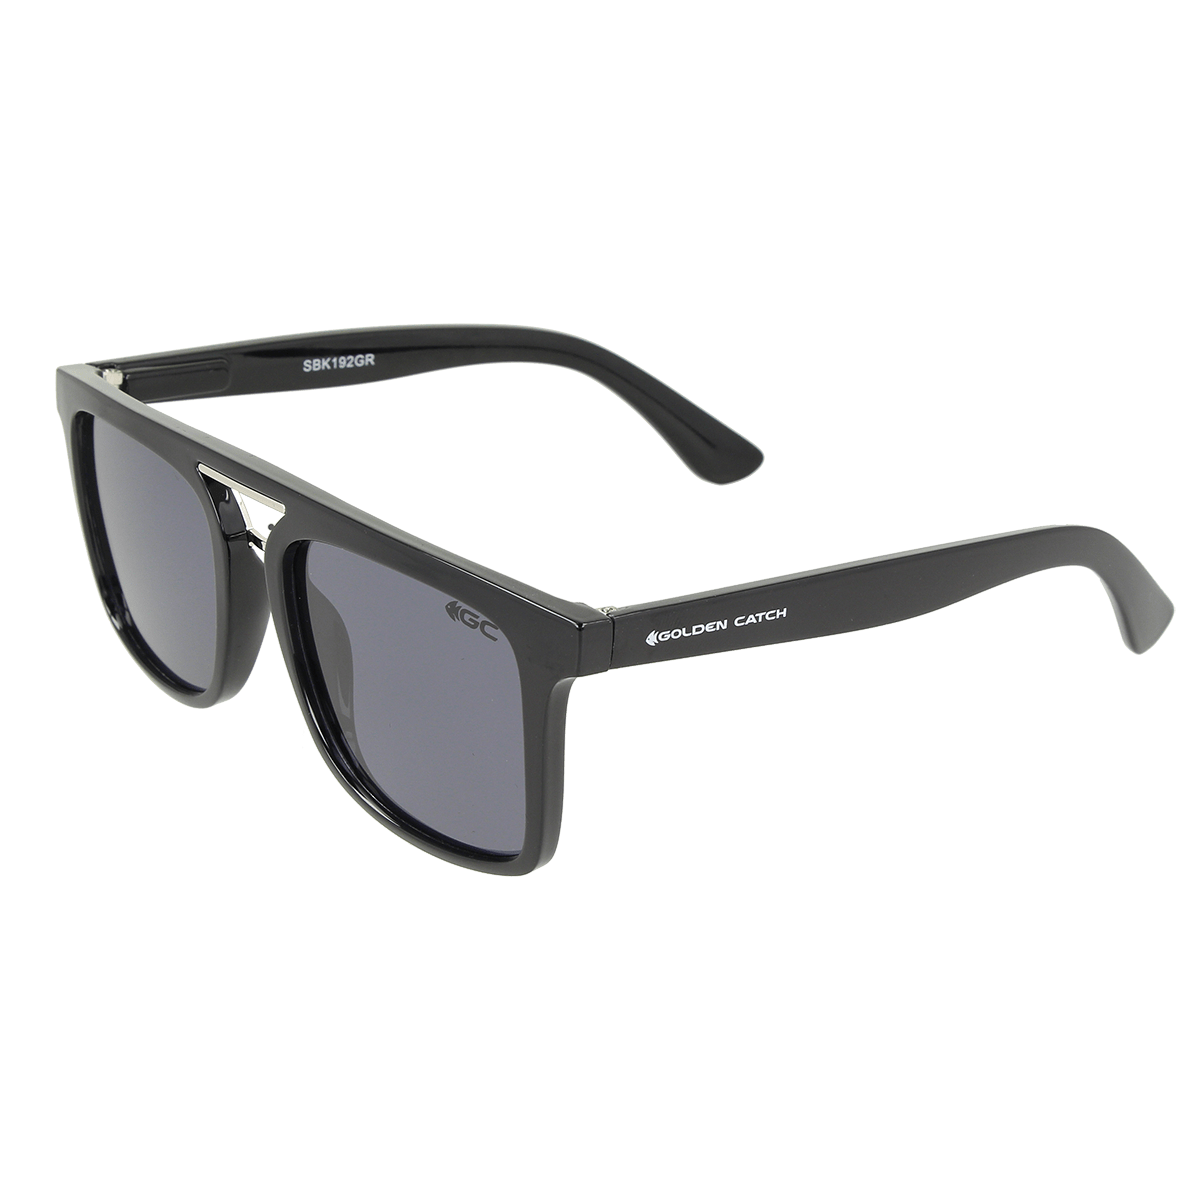 Golden Catch Polarized Sunglasses SBK192GR